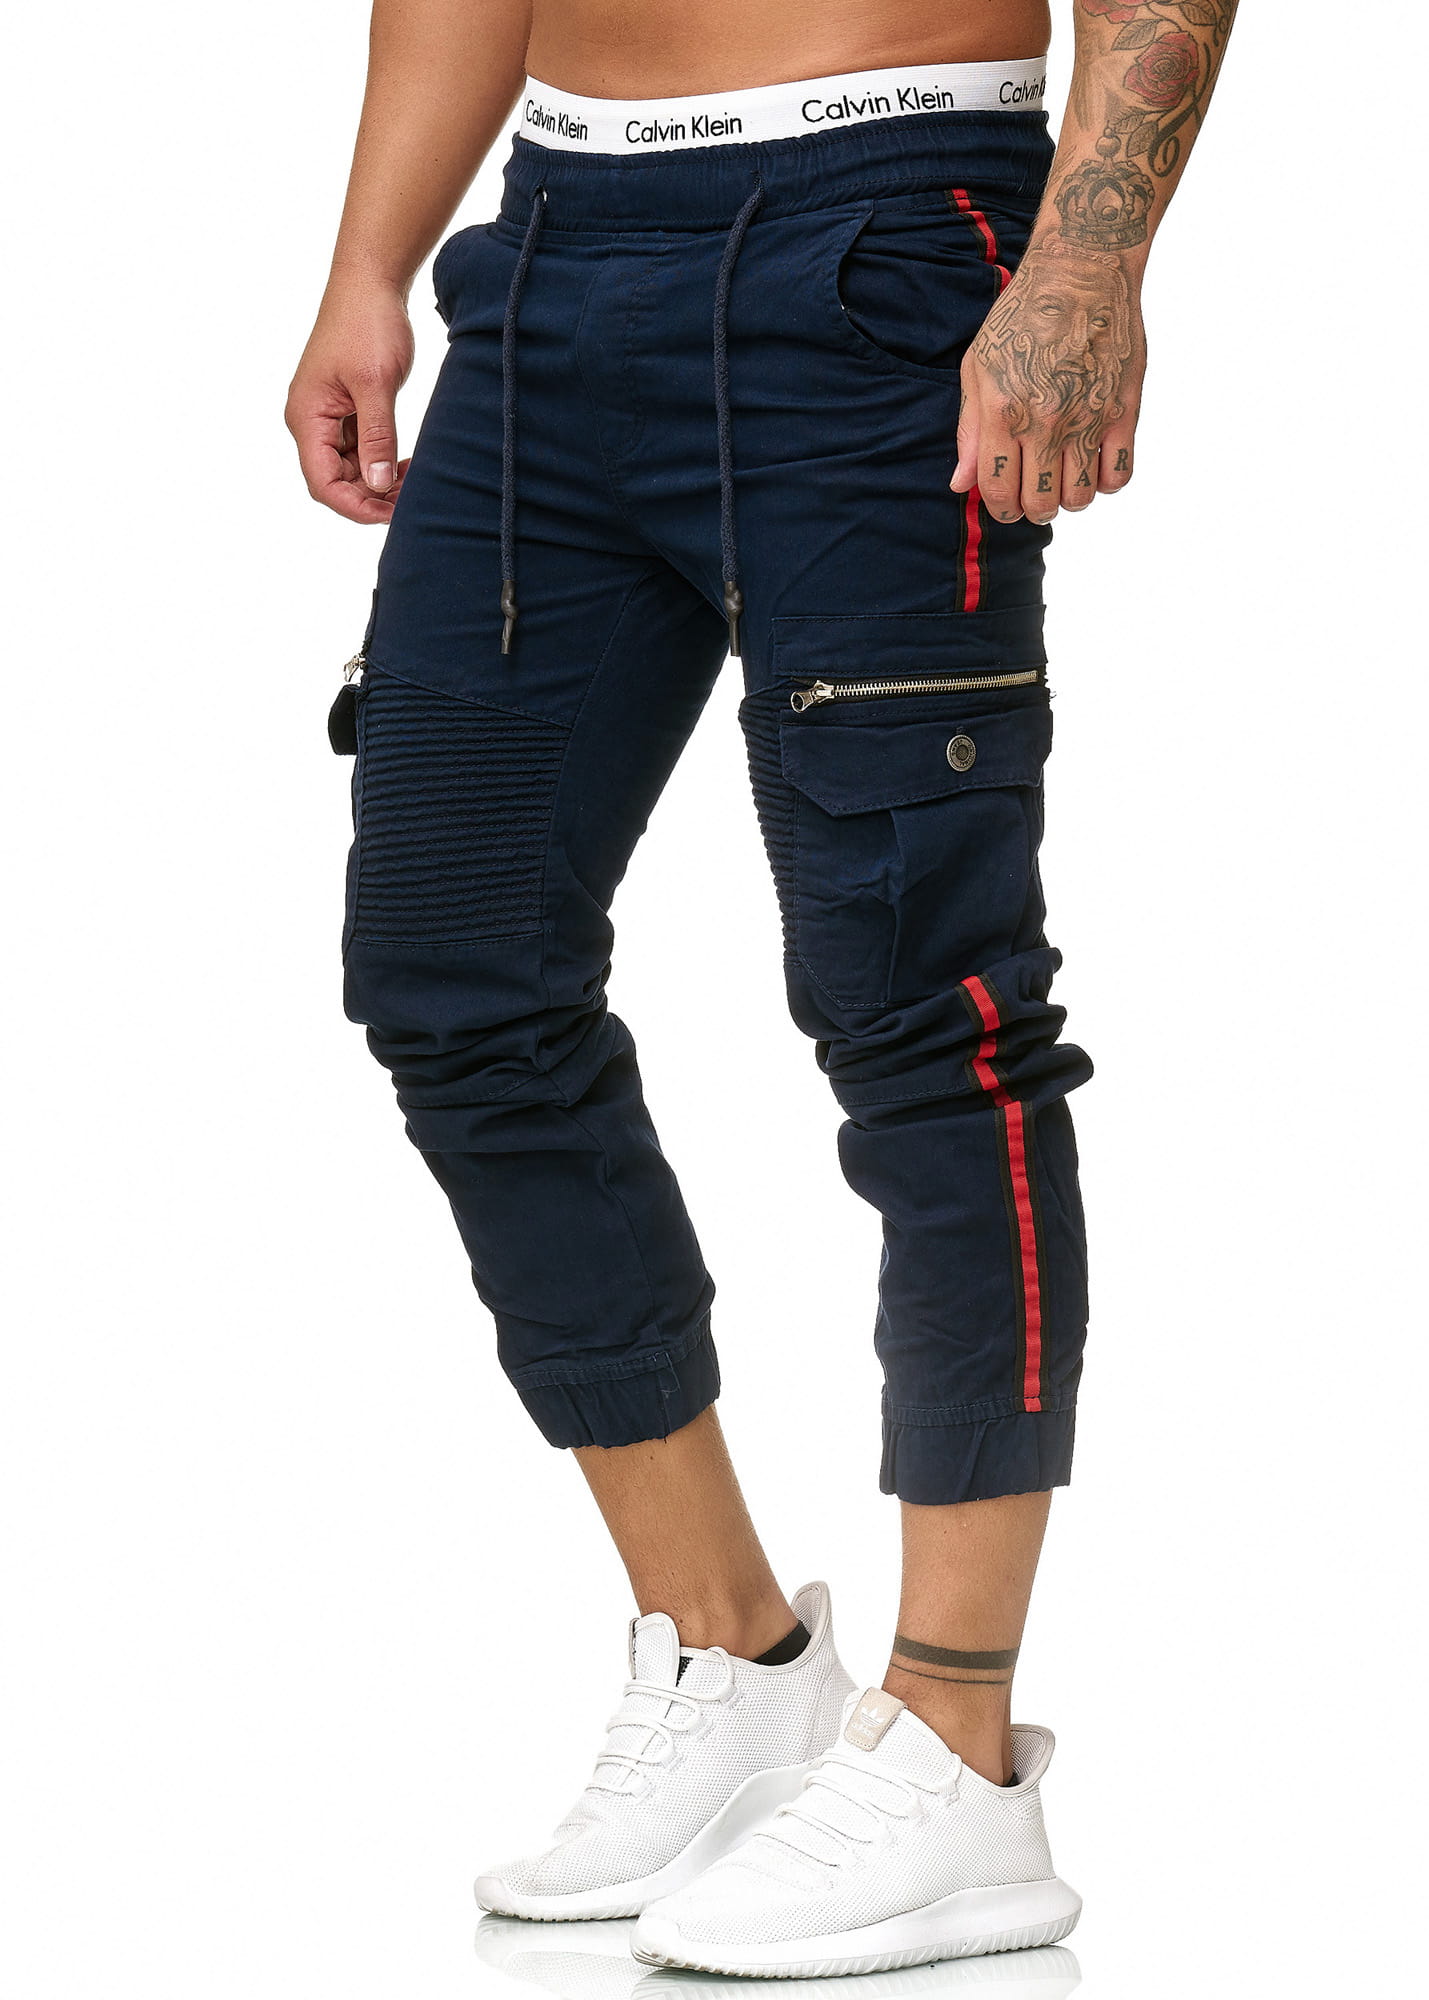 Herren Chino Hose Jeans Designer Chinohose Slim Fit Manner Skinny 3299c Chinos Jeans Chinos Manner Oneredox Style Factory